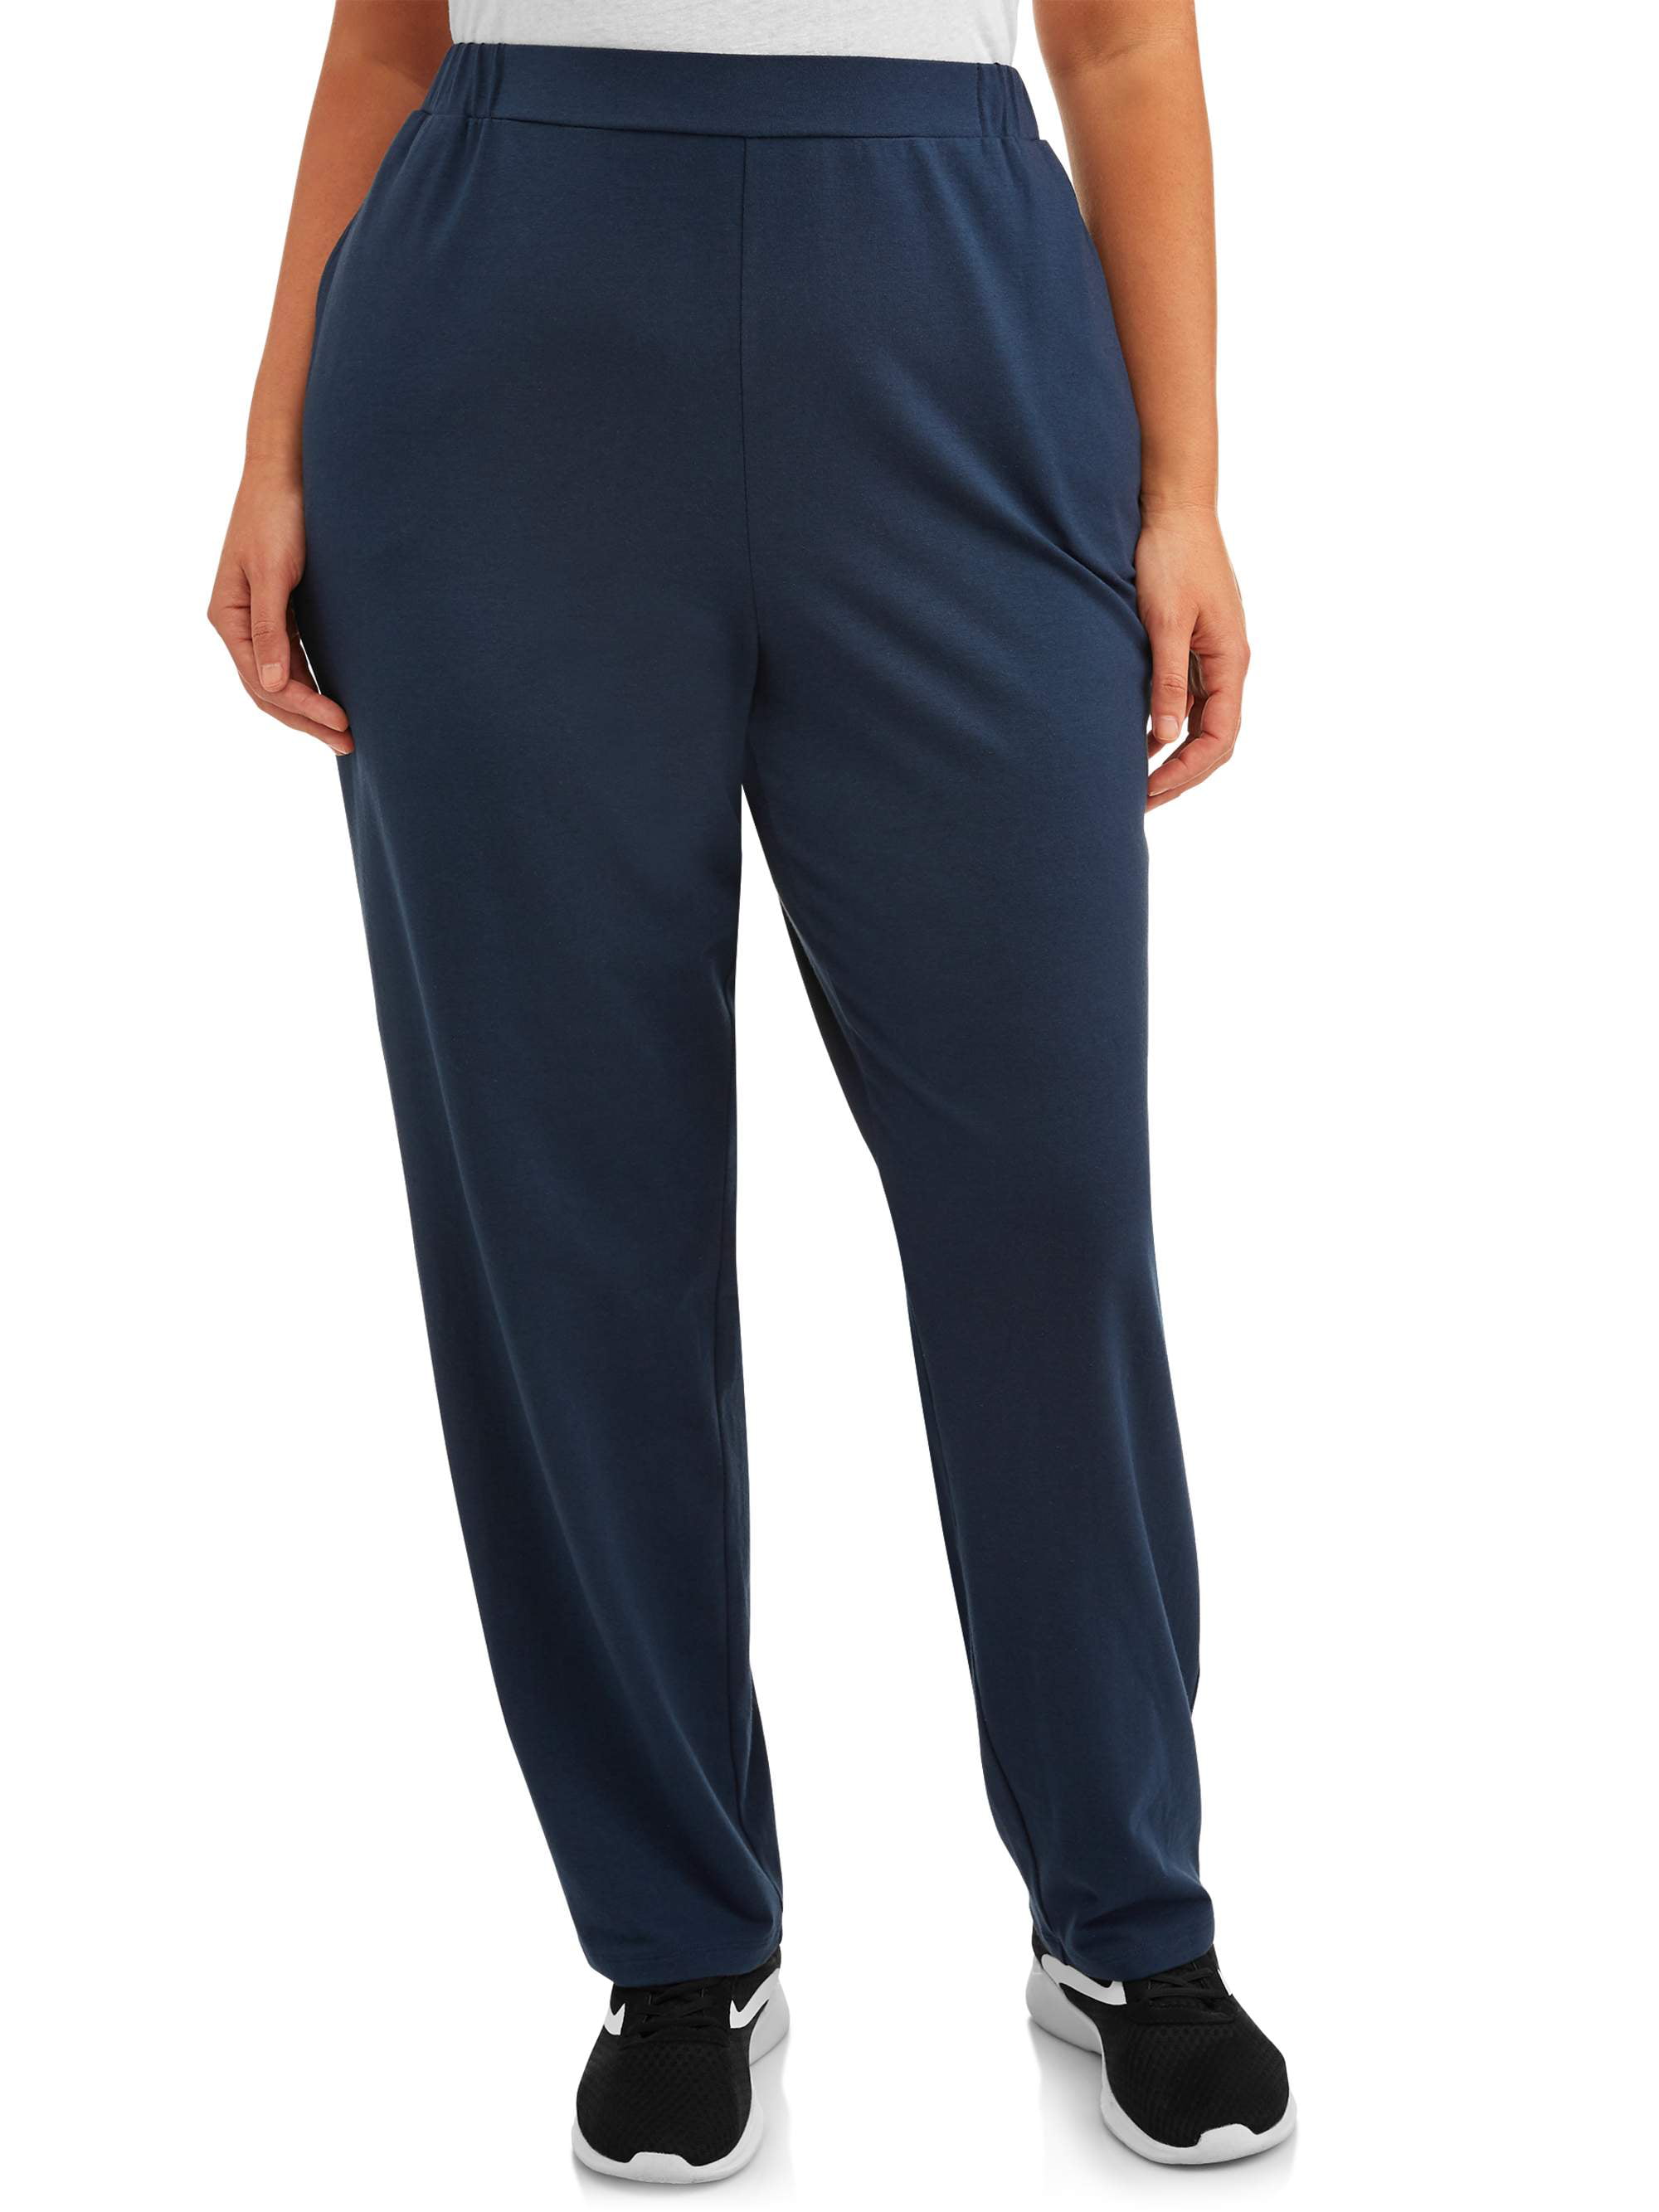 Terra & Sky Women's Plus Size Knit Pants (Regular and Petite Lengths)